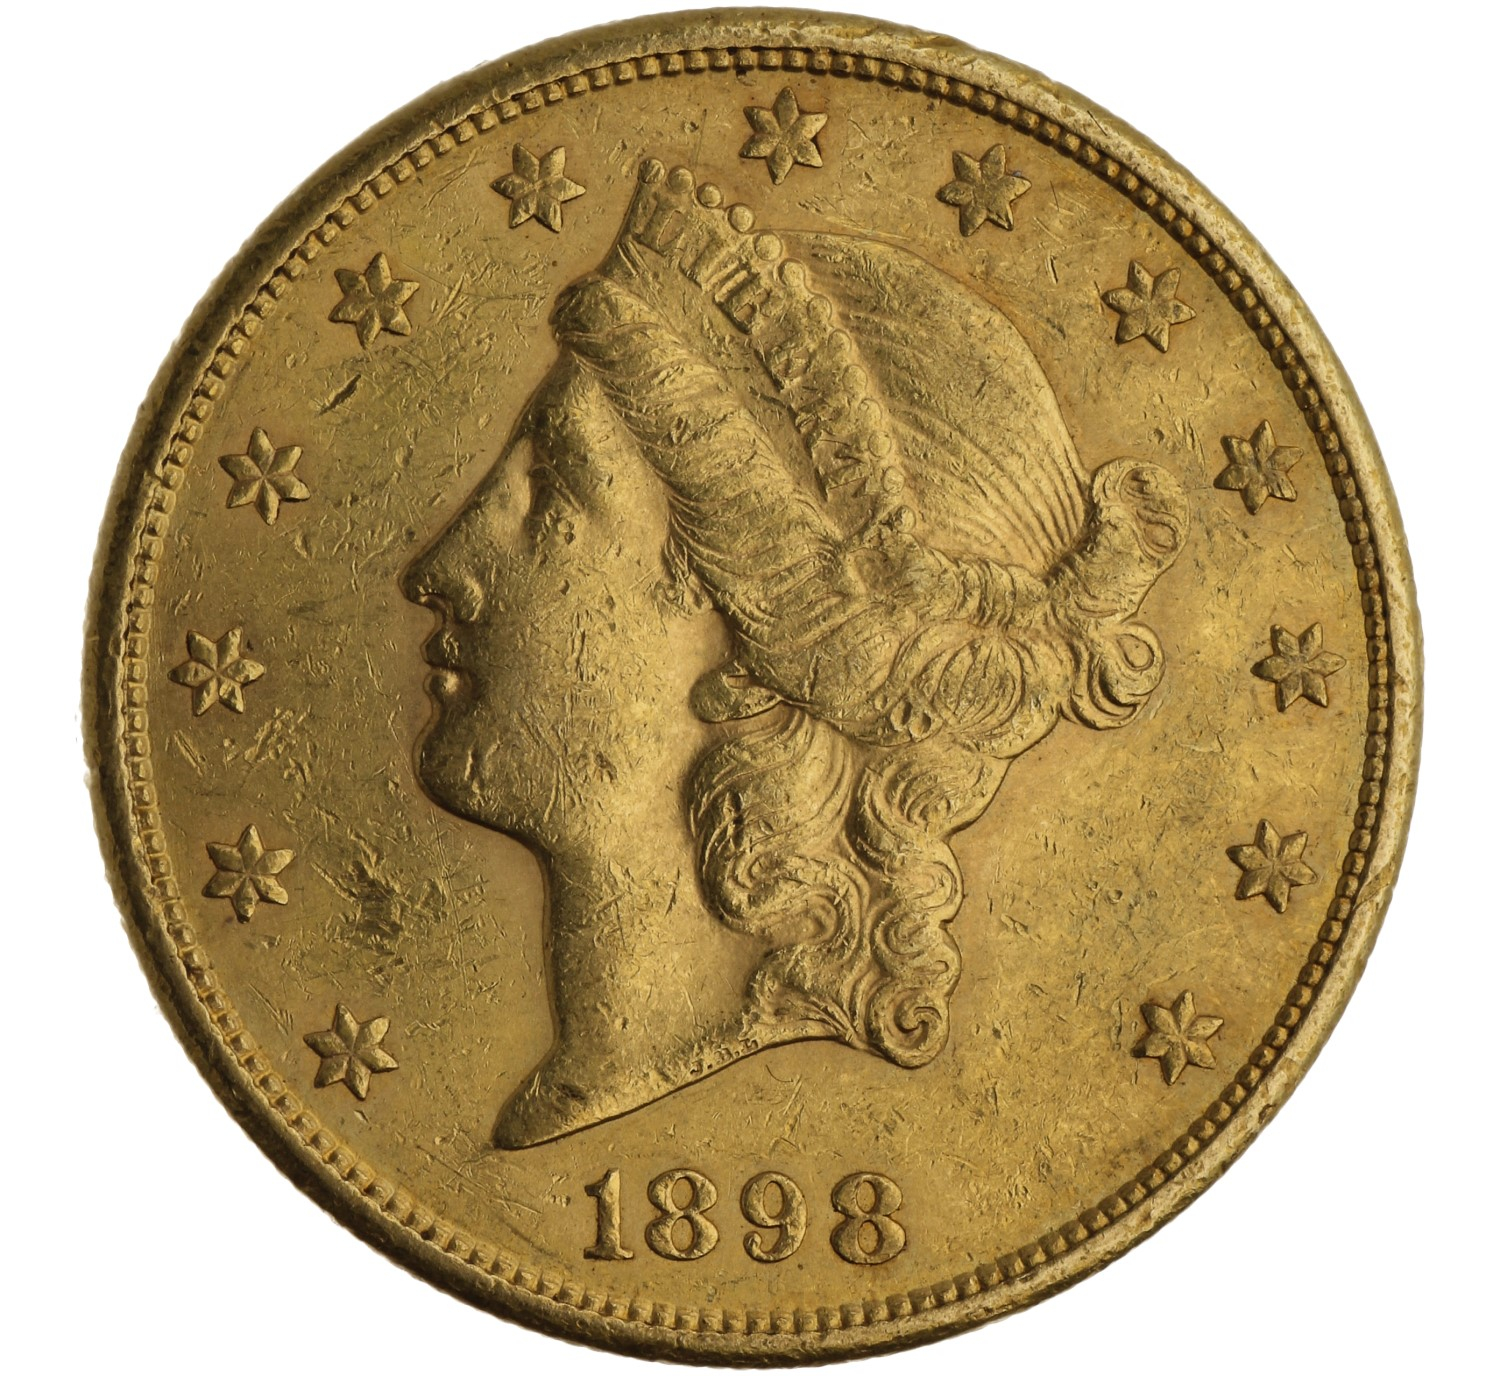 20 Dollars - USA - 1898 S